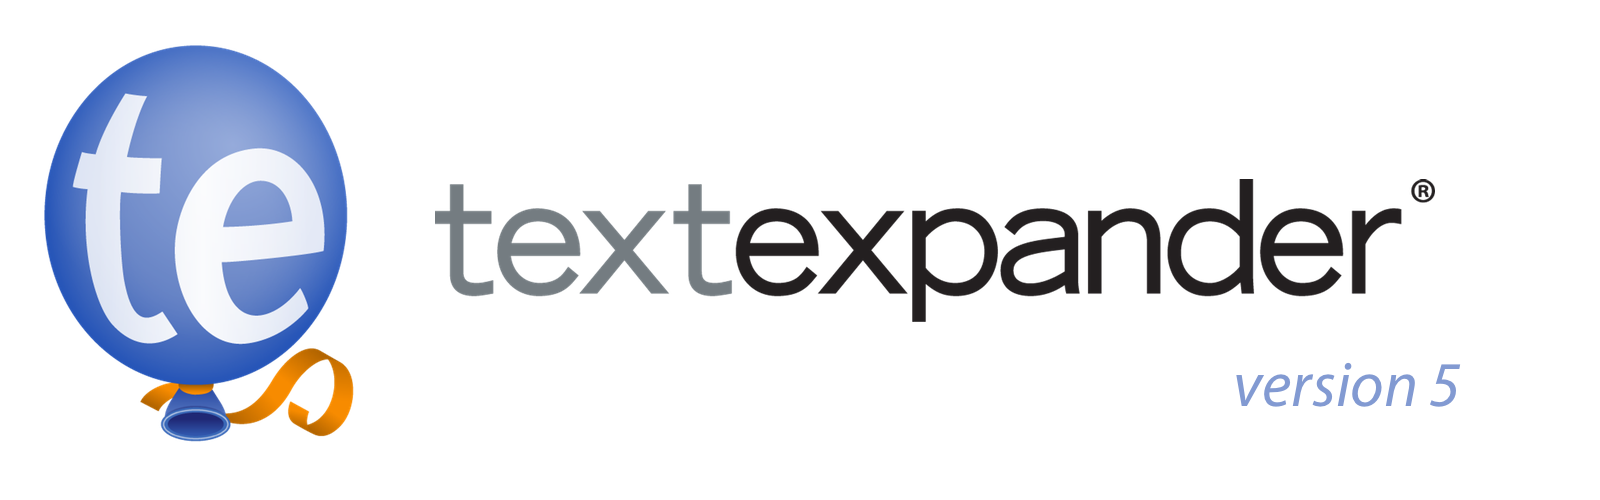 textexpander troubleshooting